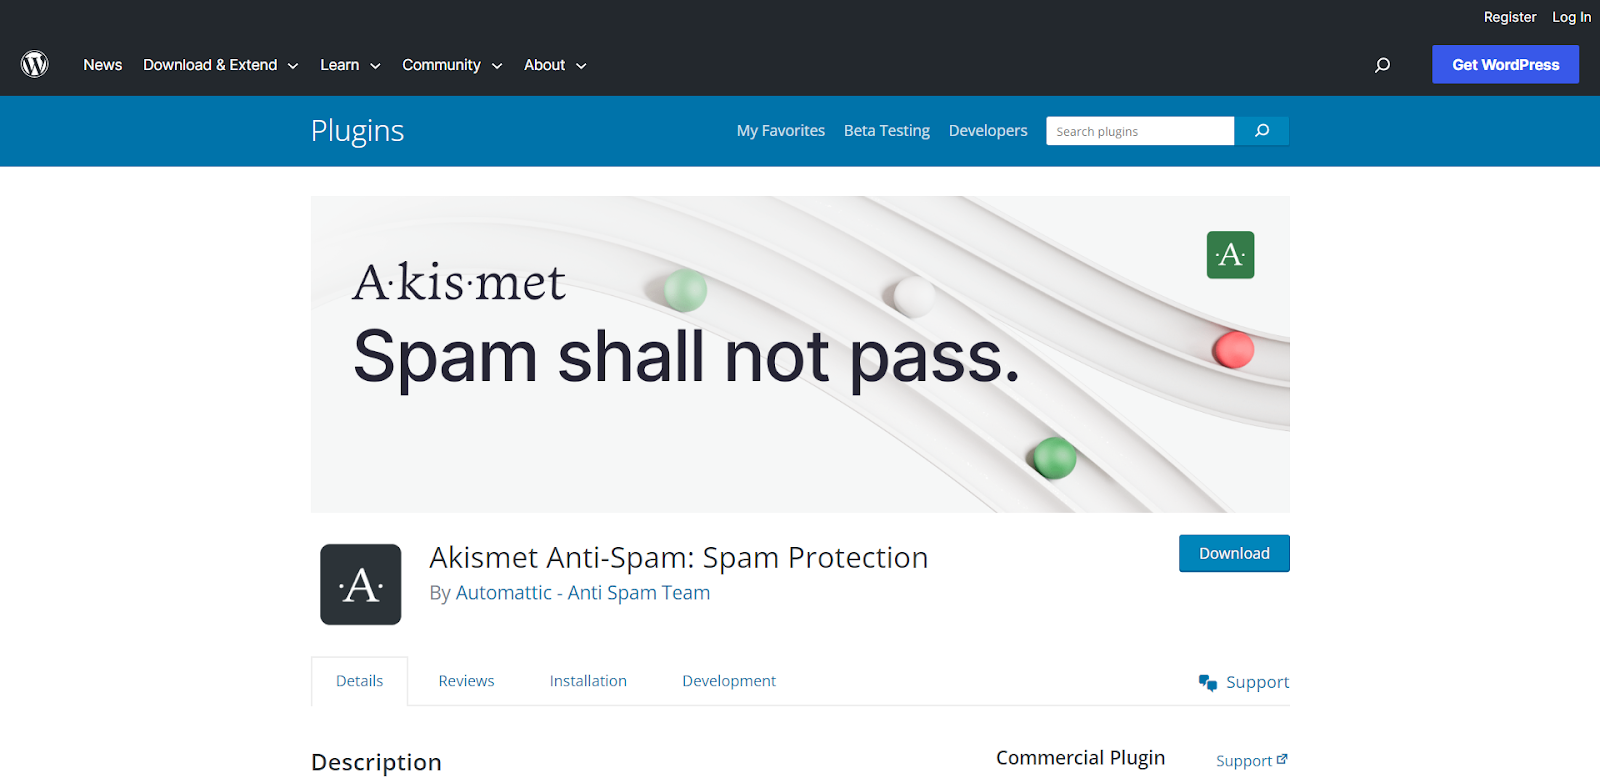 3. Akismet Anti Spam: Spam Protection plugin